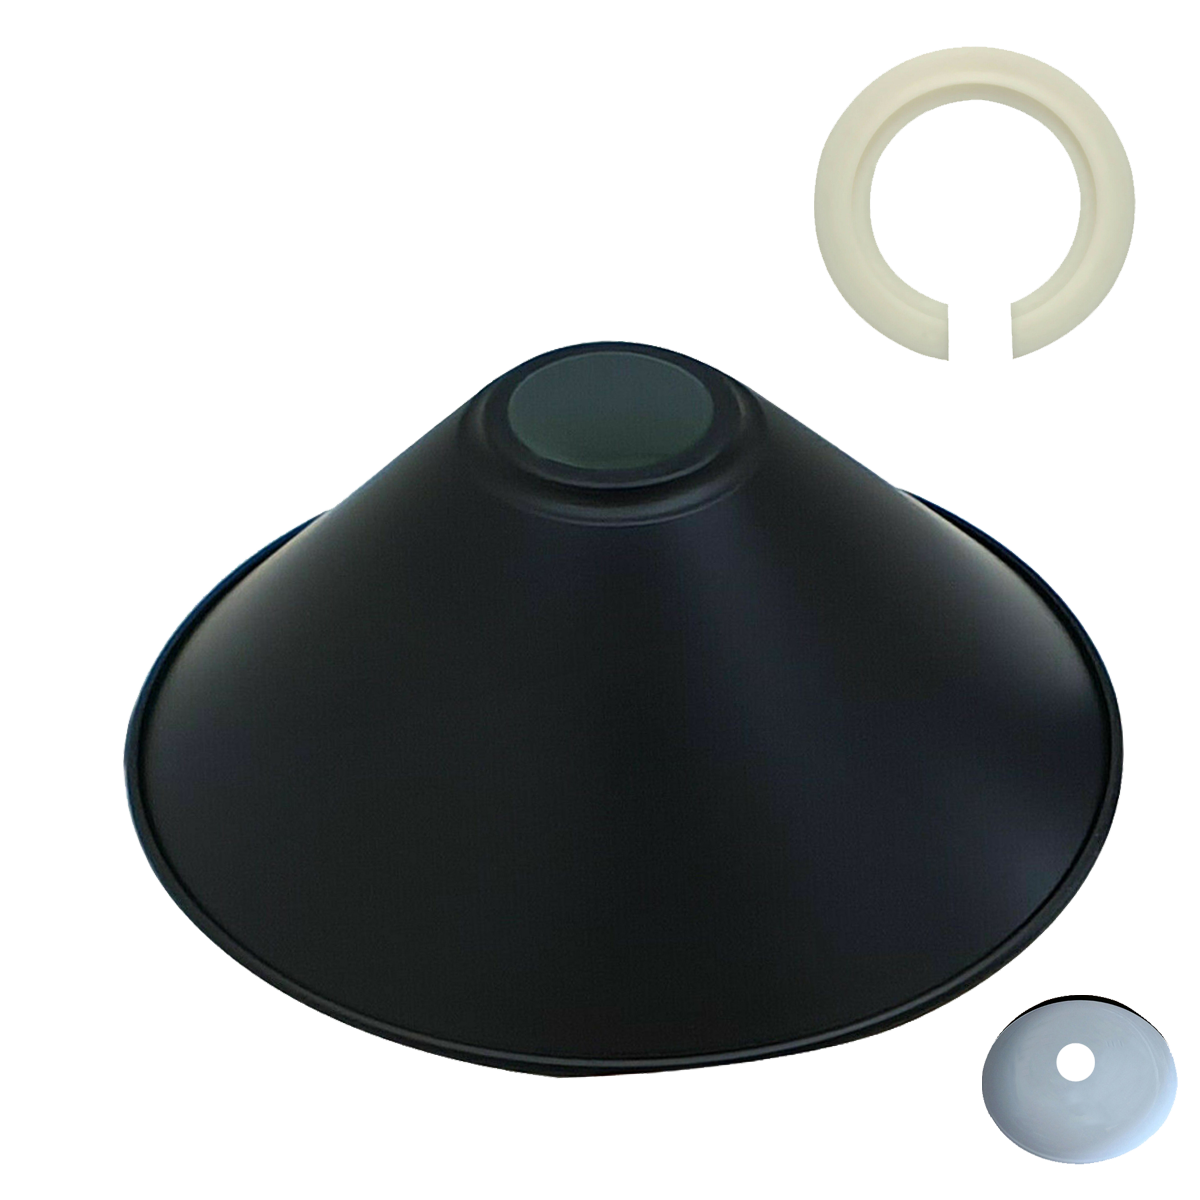 Modern Ceiling Pendant Light Shades Black Colour Lamp Shades Easy Fit New~1103 - LEDSone UK Ltd